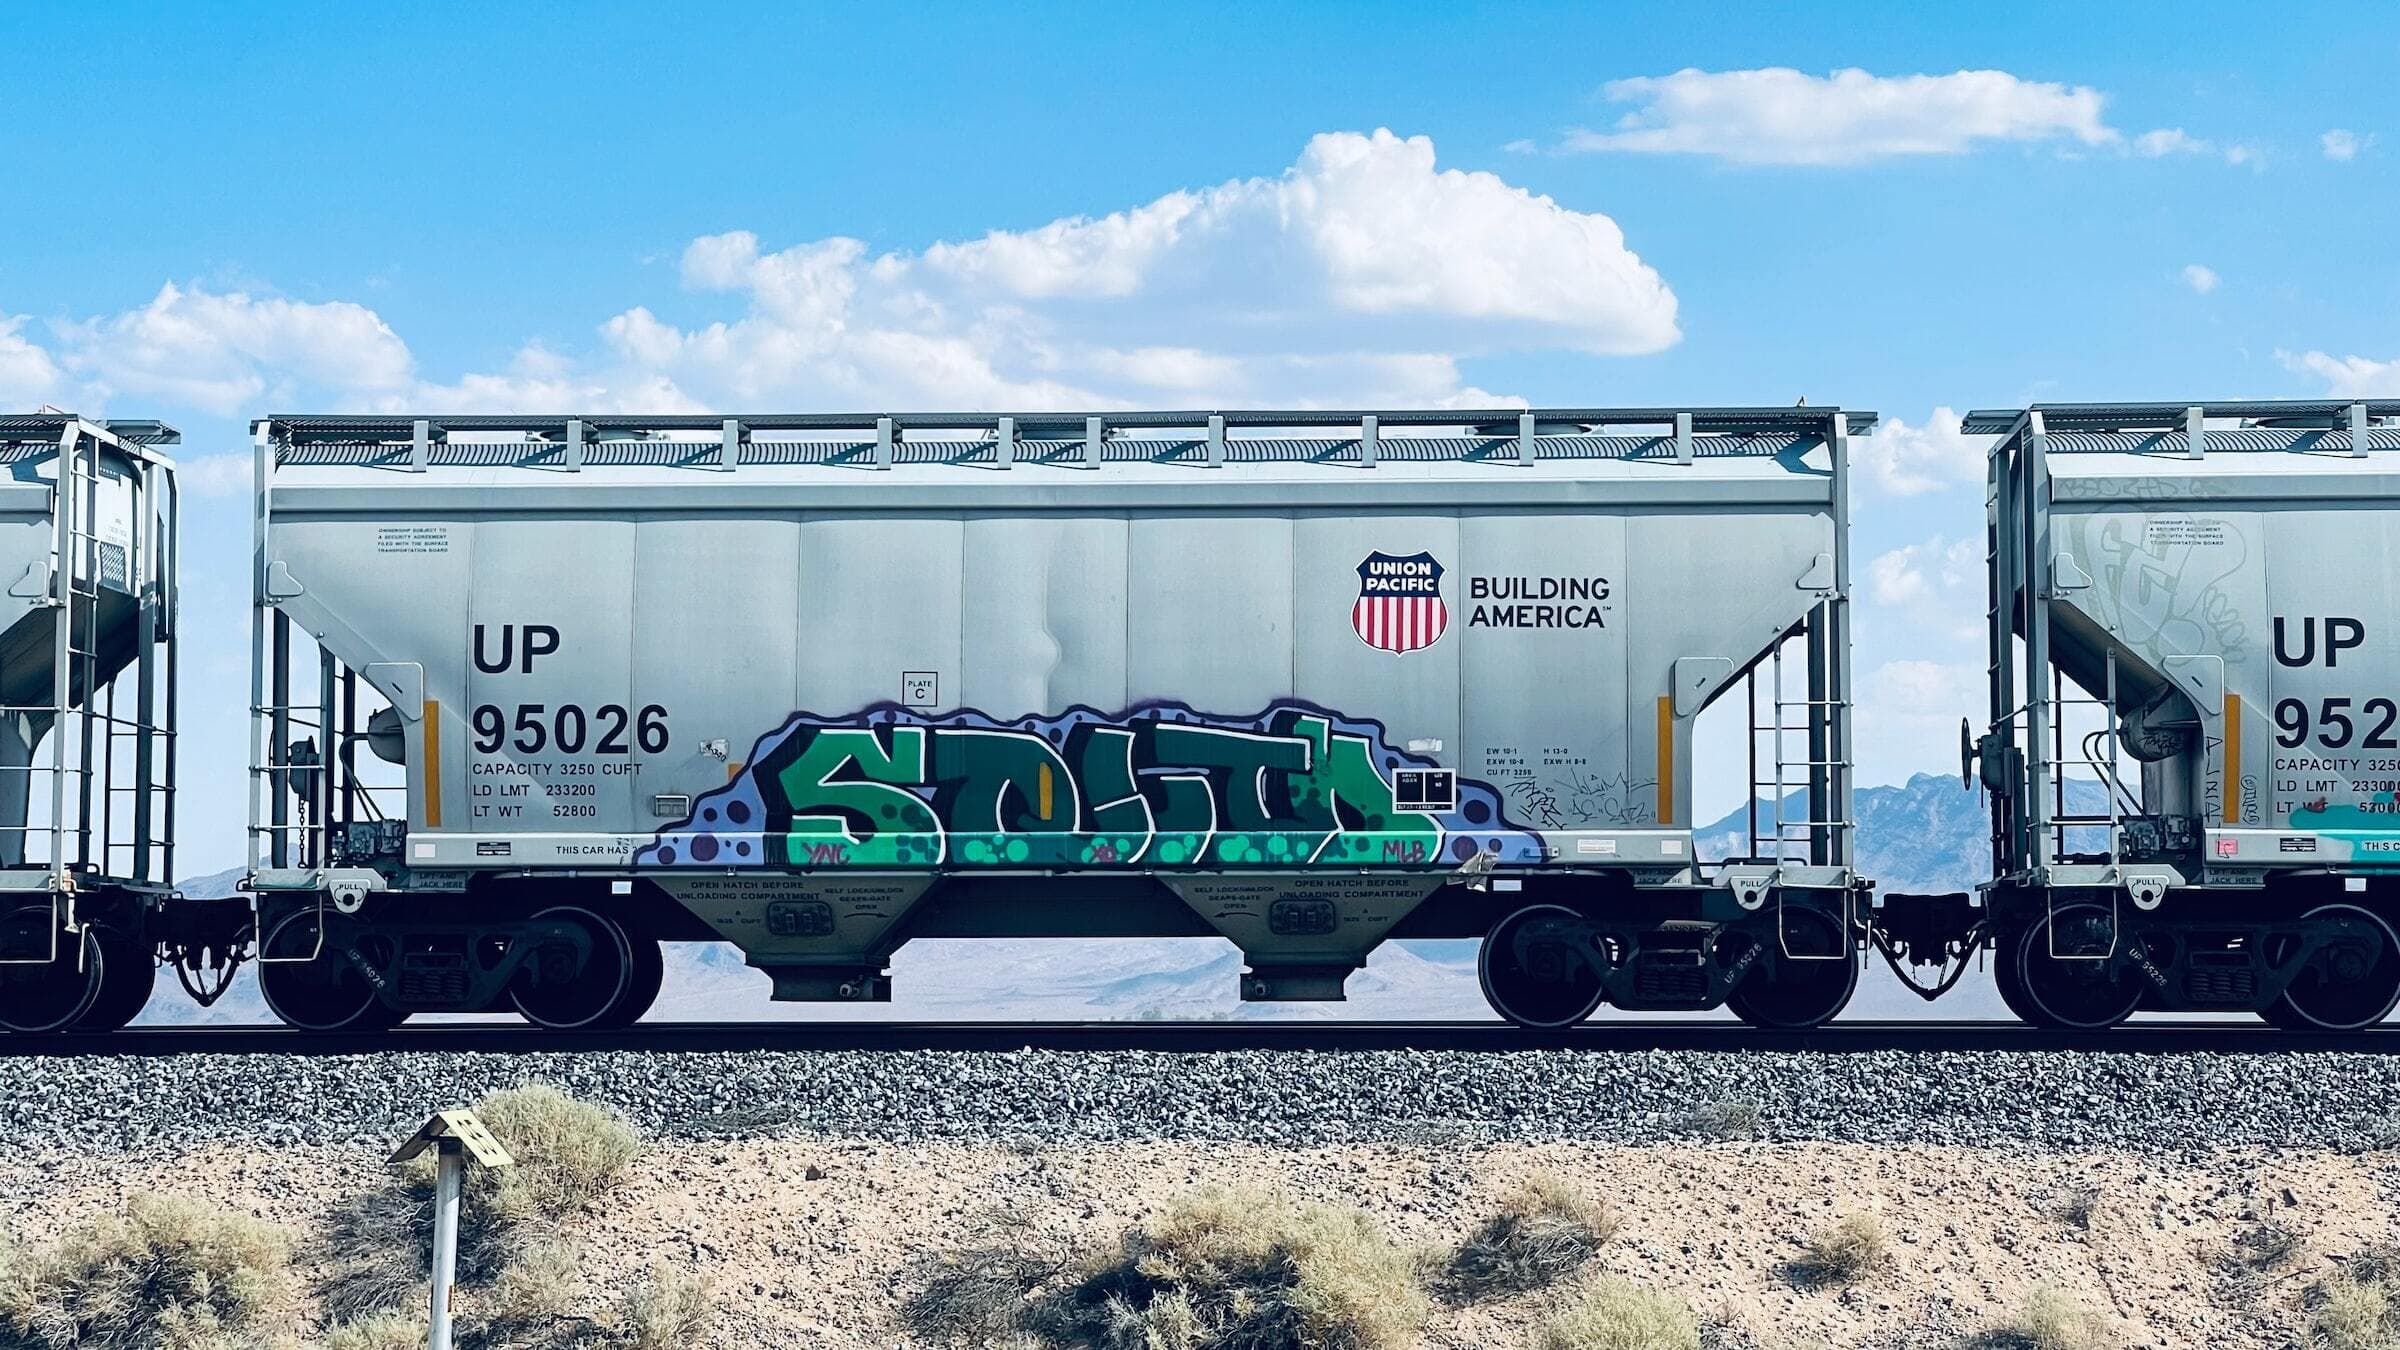 train on a track covered in graffiti